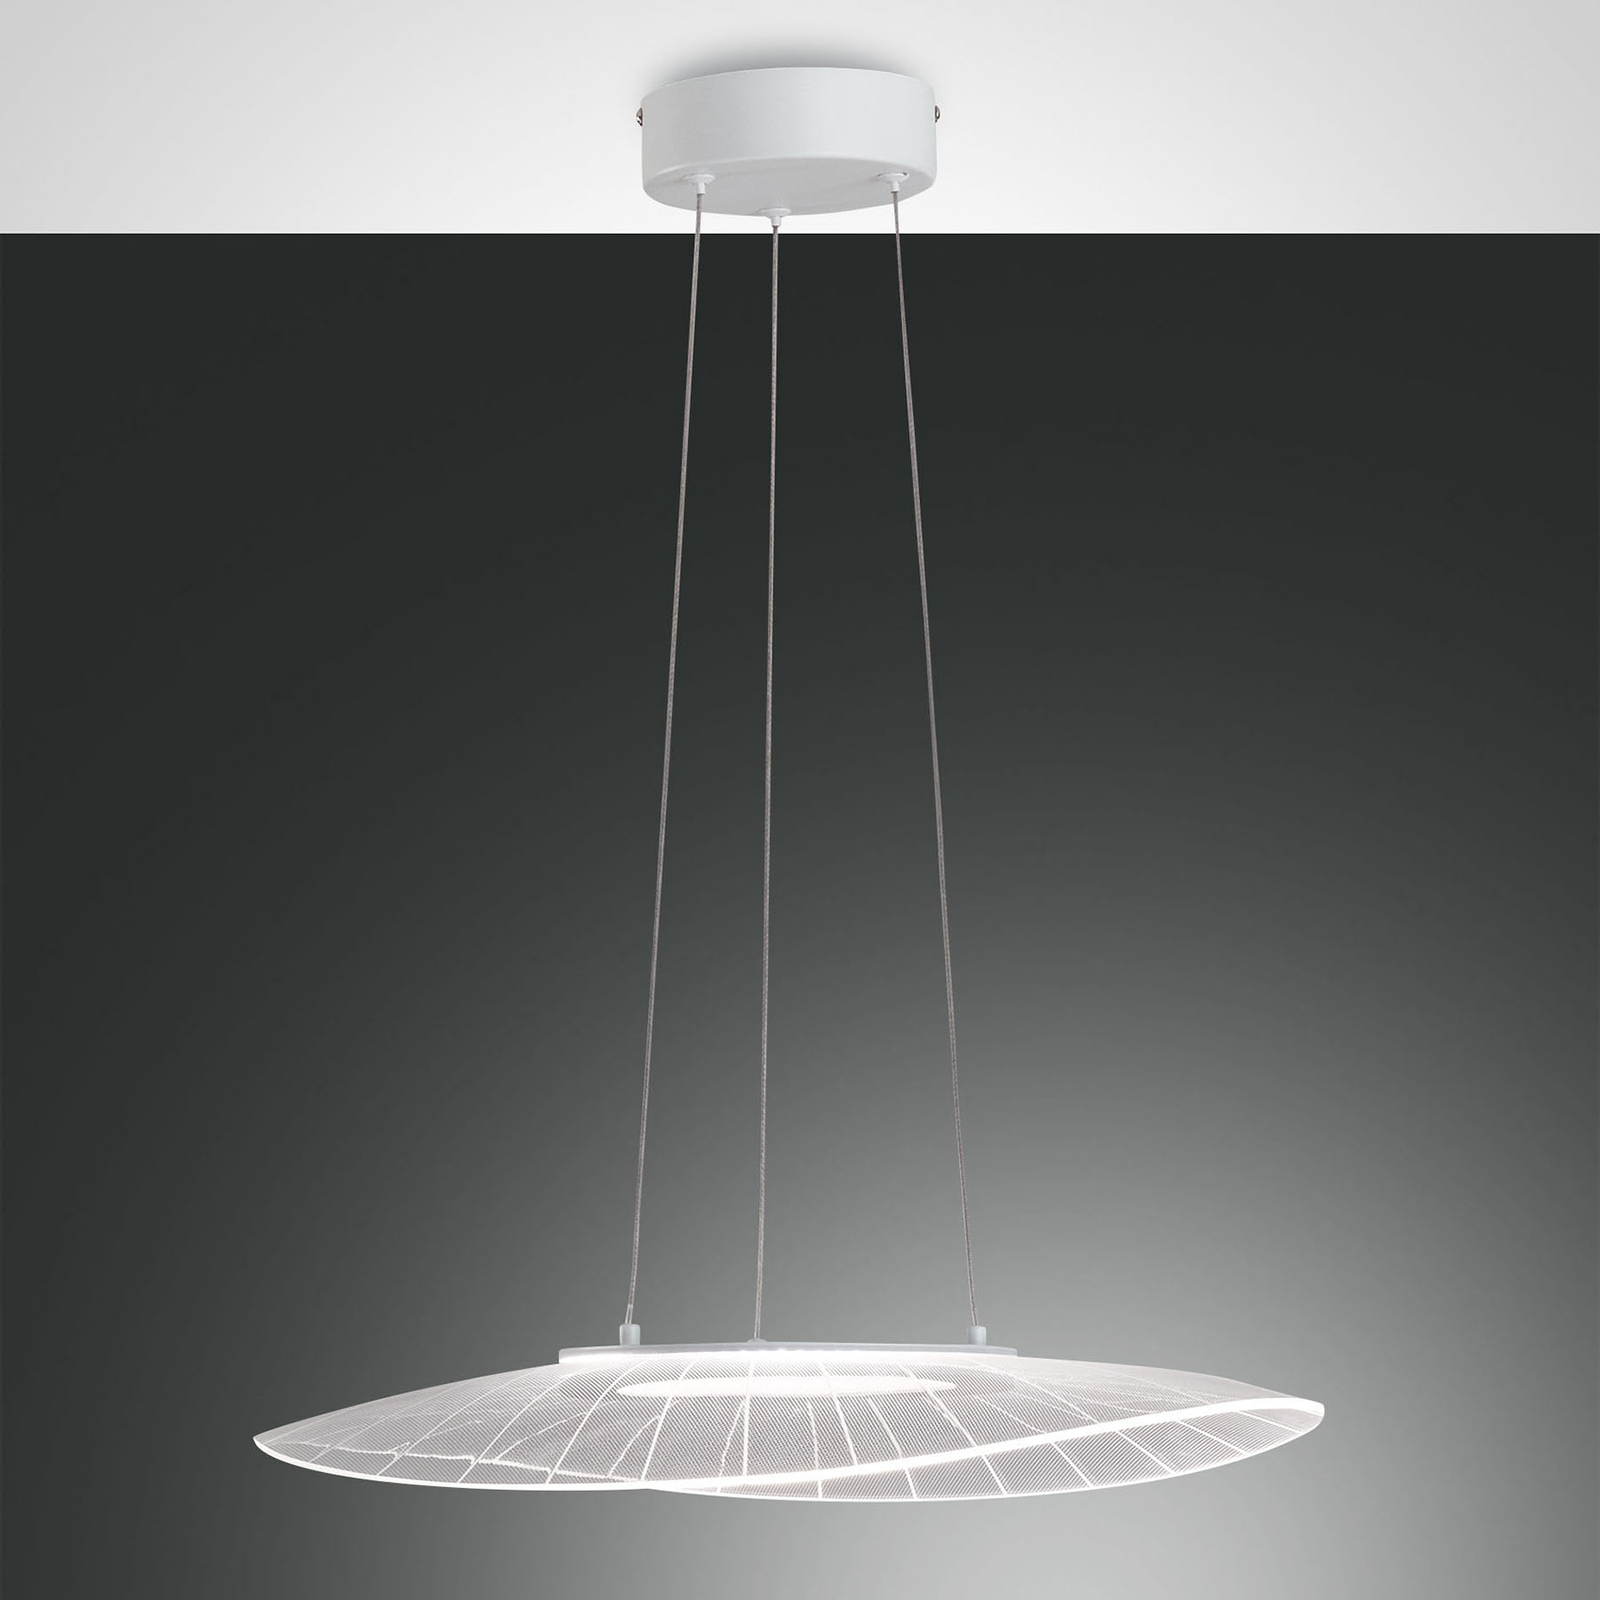 LED-Hängeleuchte Vela, weiß, oval, 59 cm x 43 cm